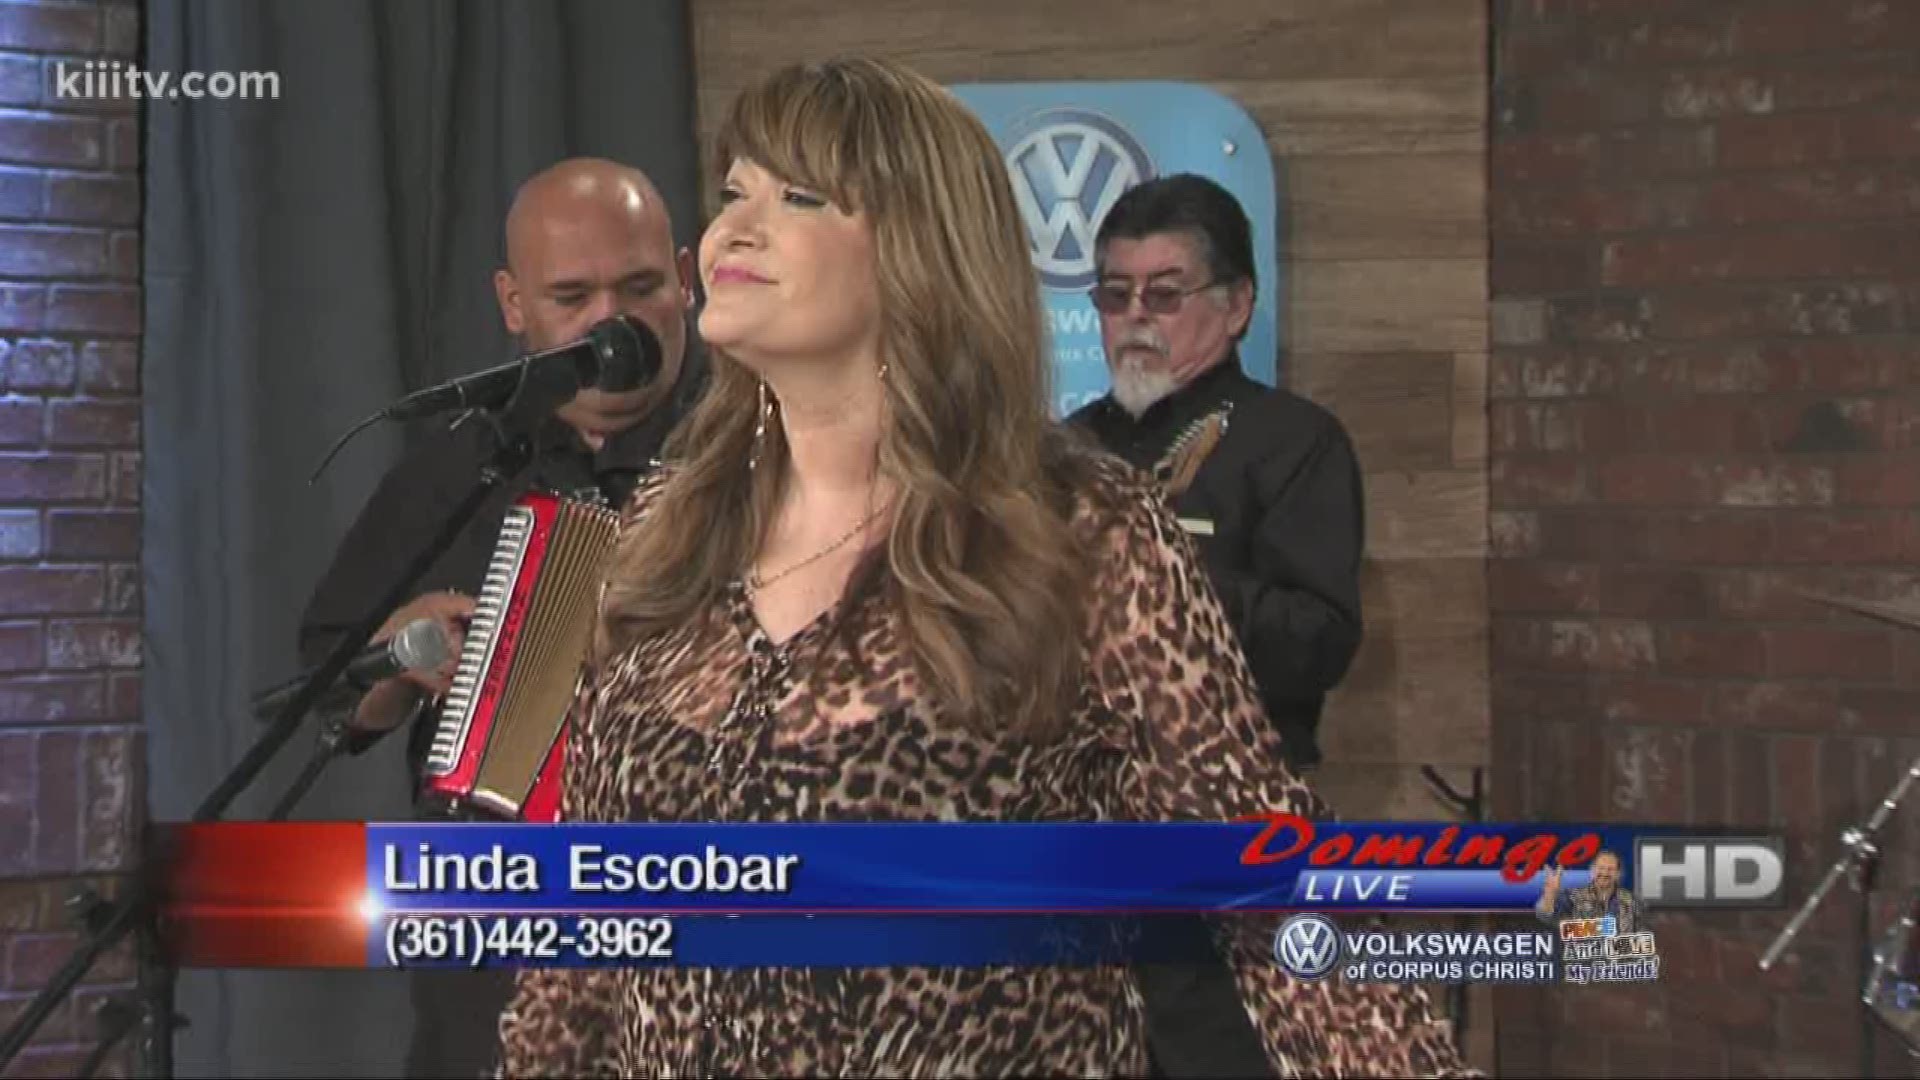 Linda Escobar performing "La Revancha" on Domingo Live.